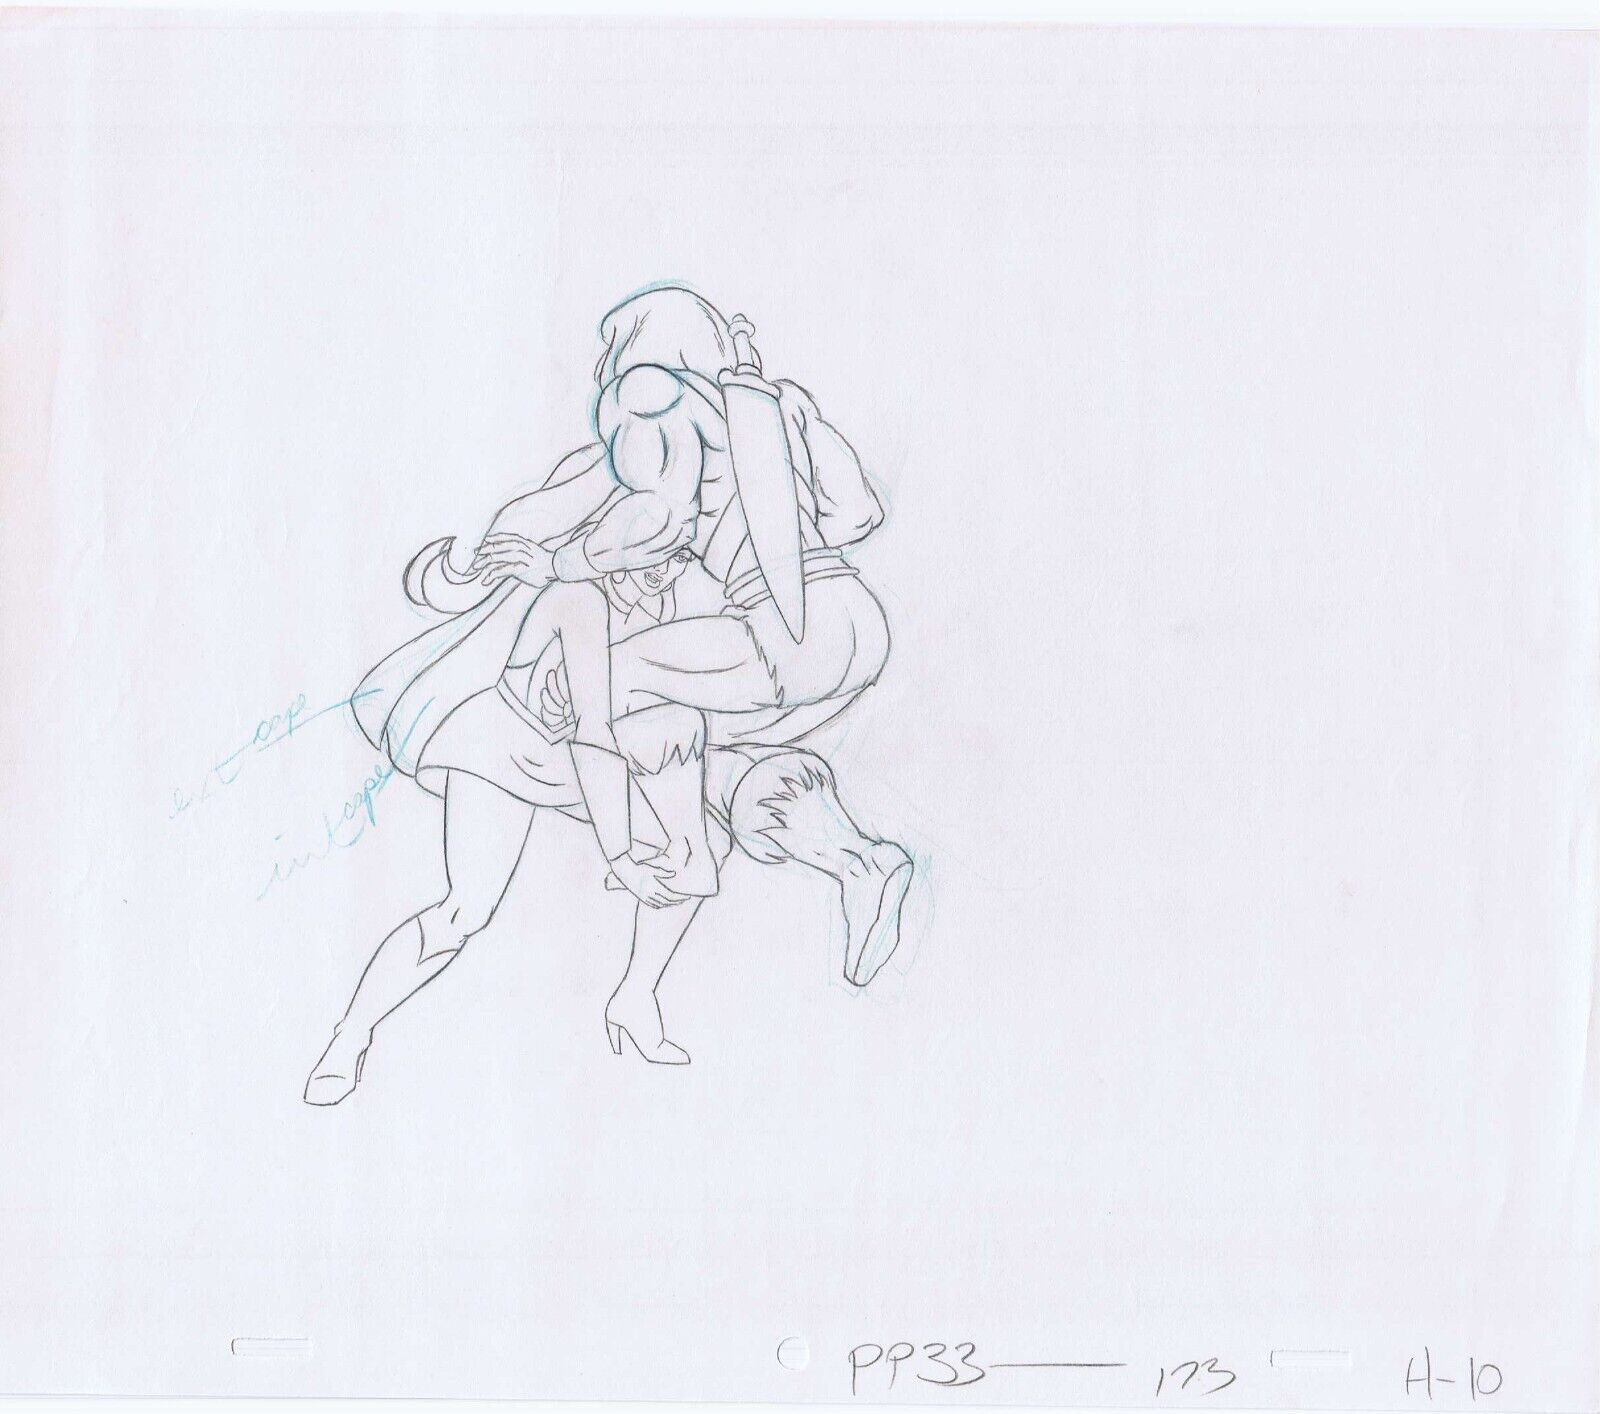 She-Ra He-Man 1985 Original Art w/COA Animation Production Pencils PP33-173 H-10